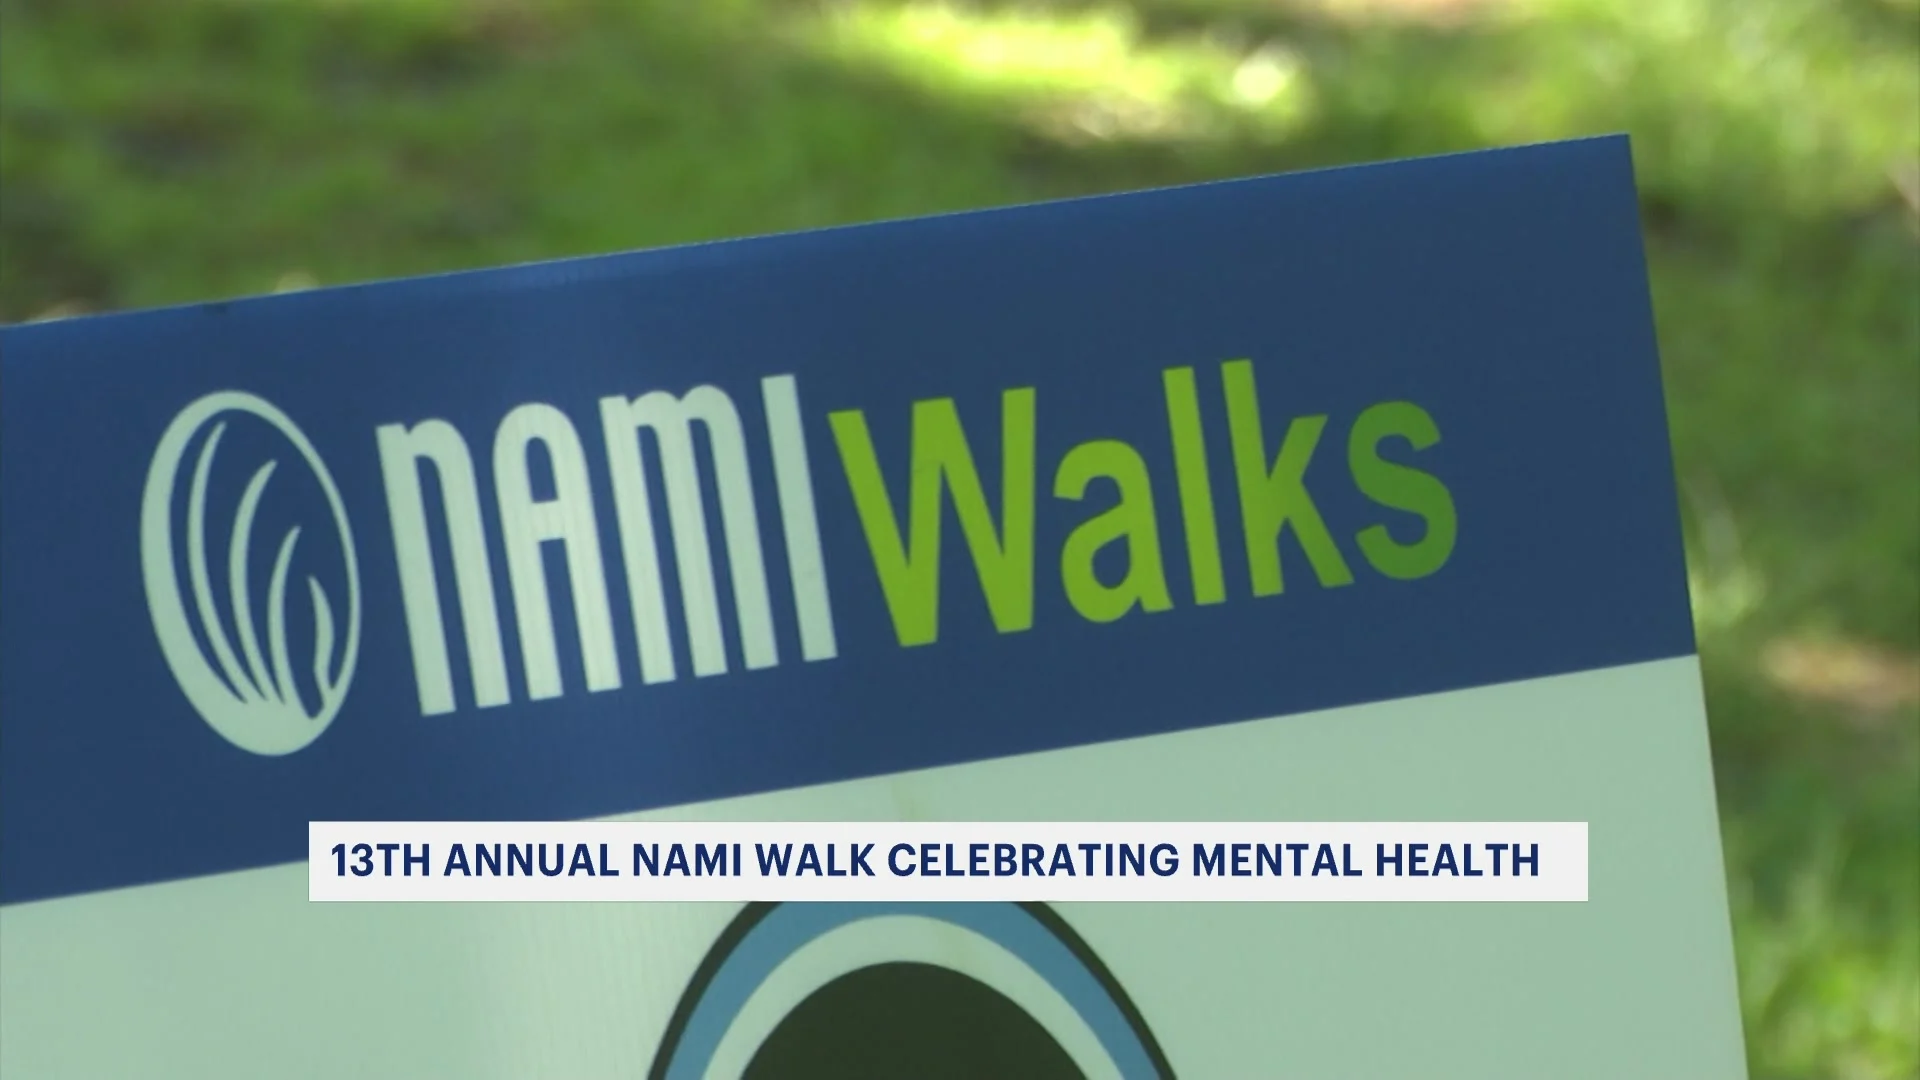 NAMIWalks Westchester raises money for mental health programs